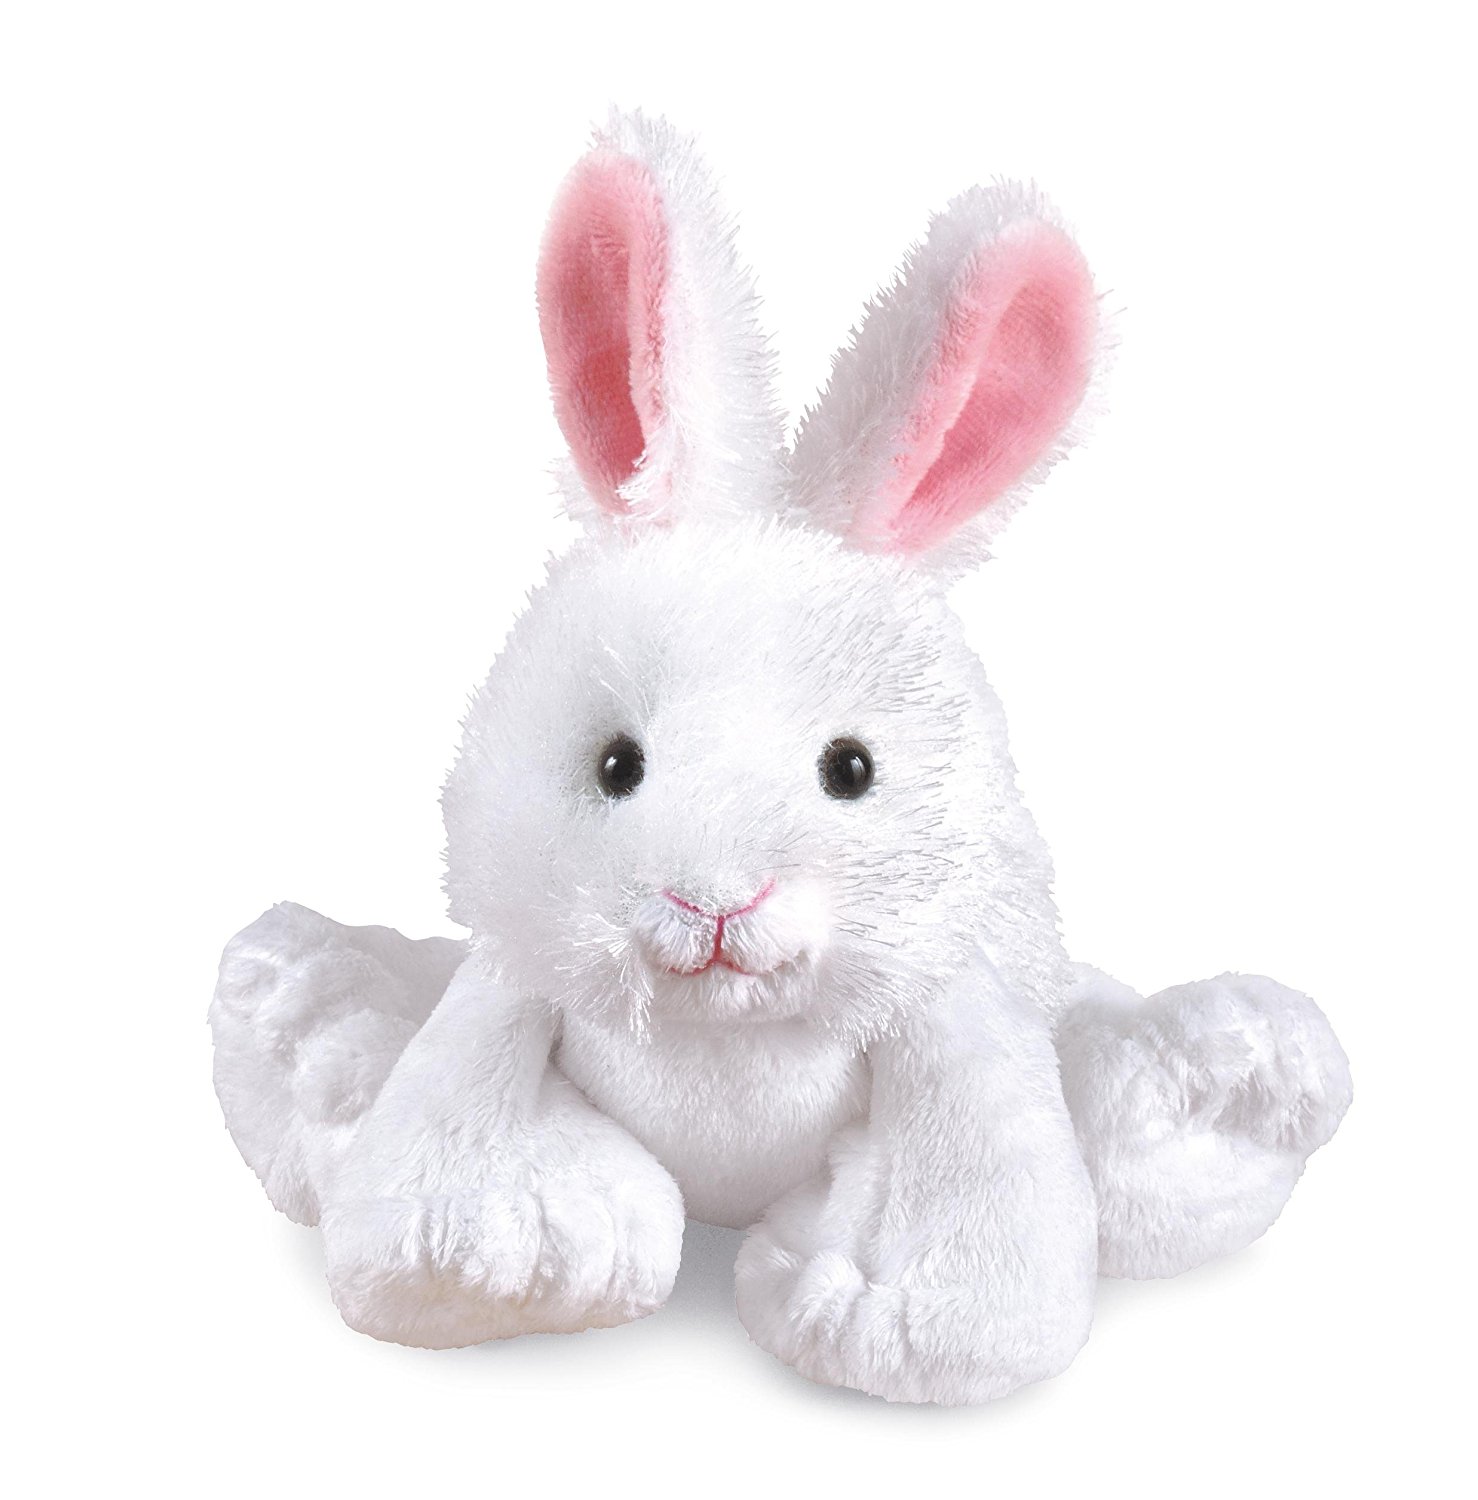 Webkinz Rabbit – Just $6.99!